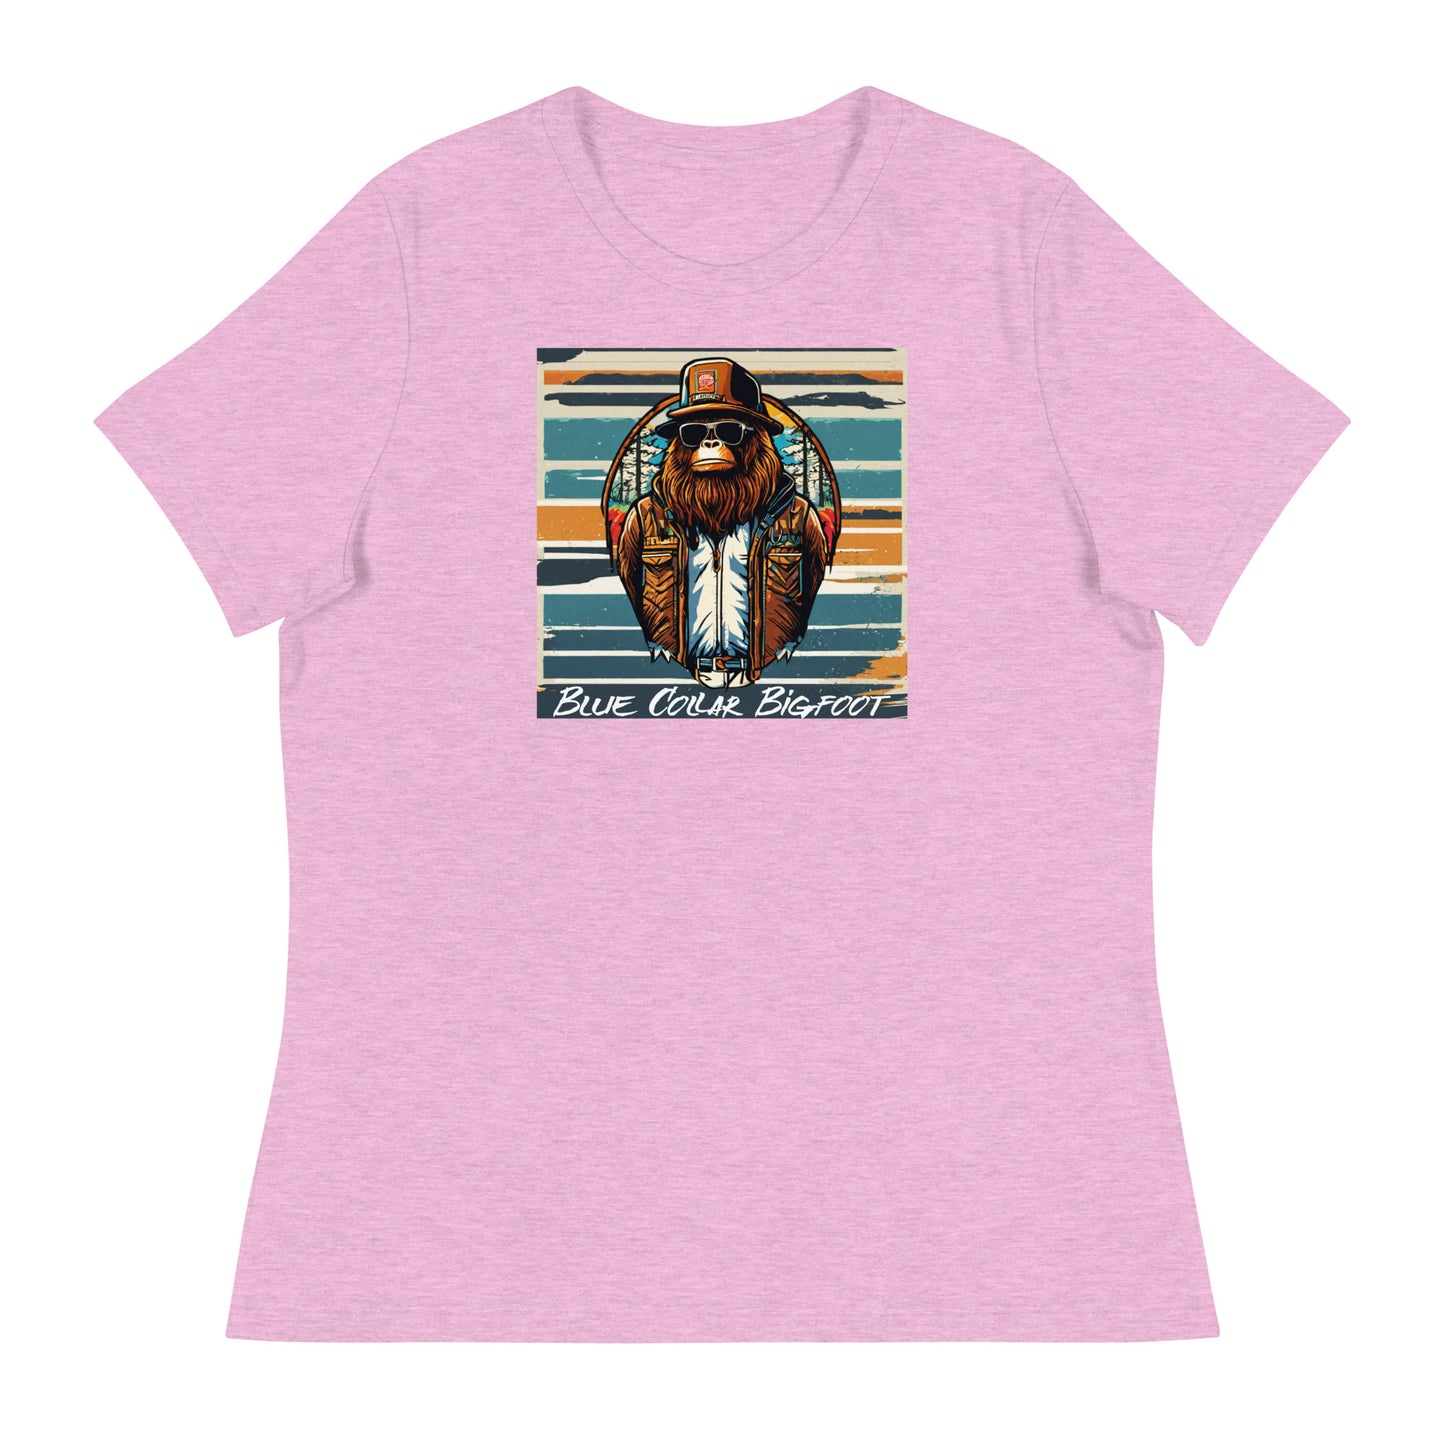 Blue-Collar Bigfoot Women's Graphic T-Shirt Heather Prism Lilac